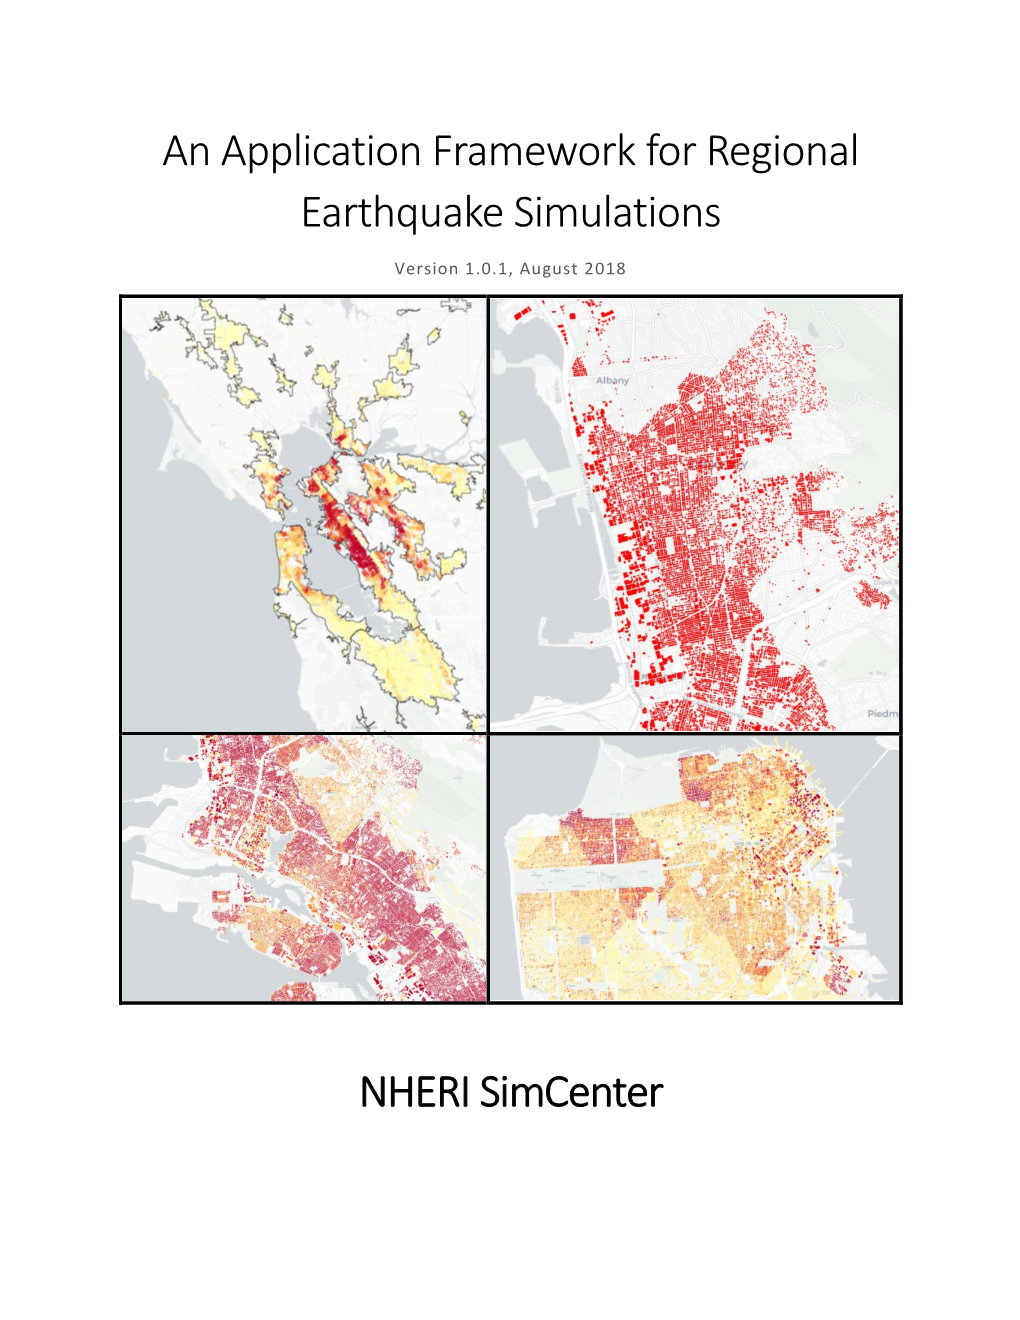 An Application Framework for Regional Earthquake Simulations